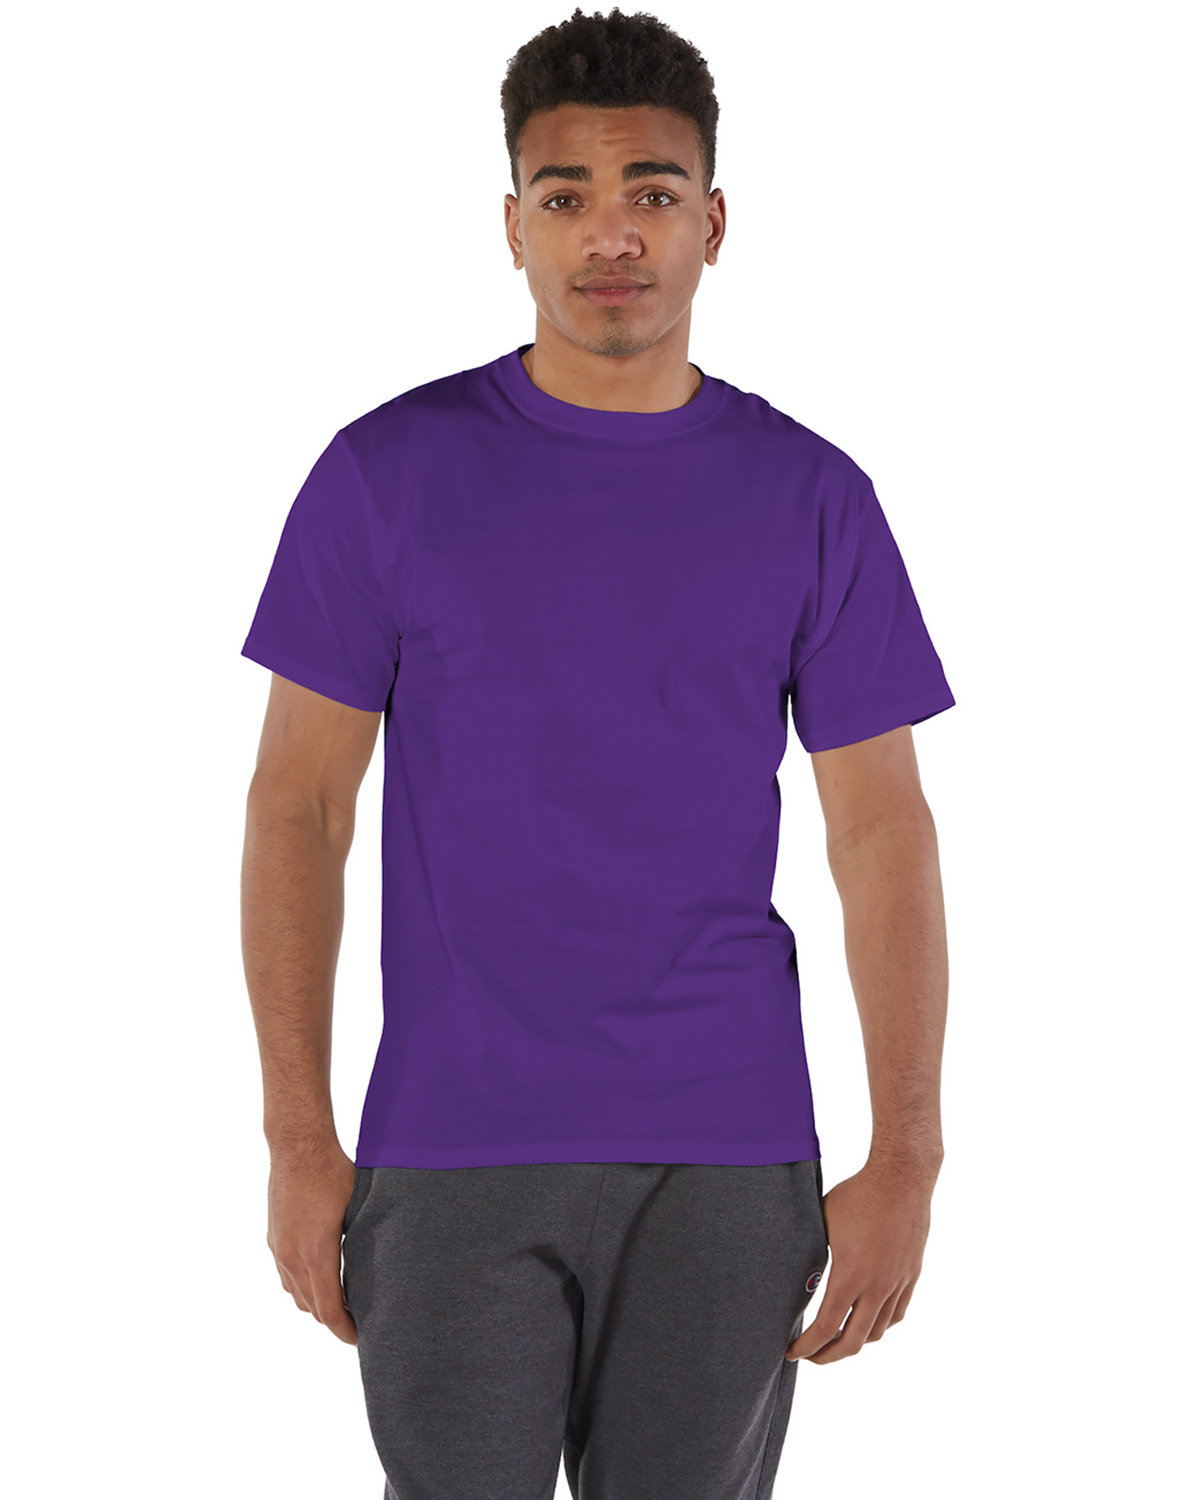 Champion Adult 6 oz. Short-Sleeve T-Shirt purple 